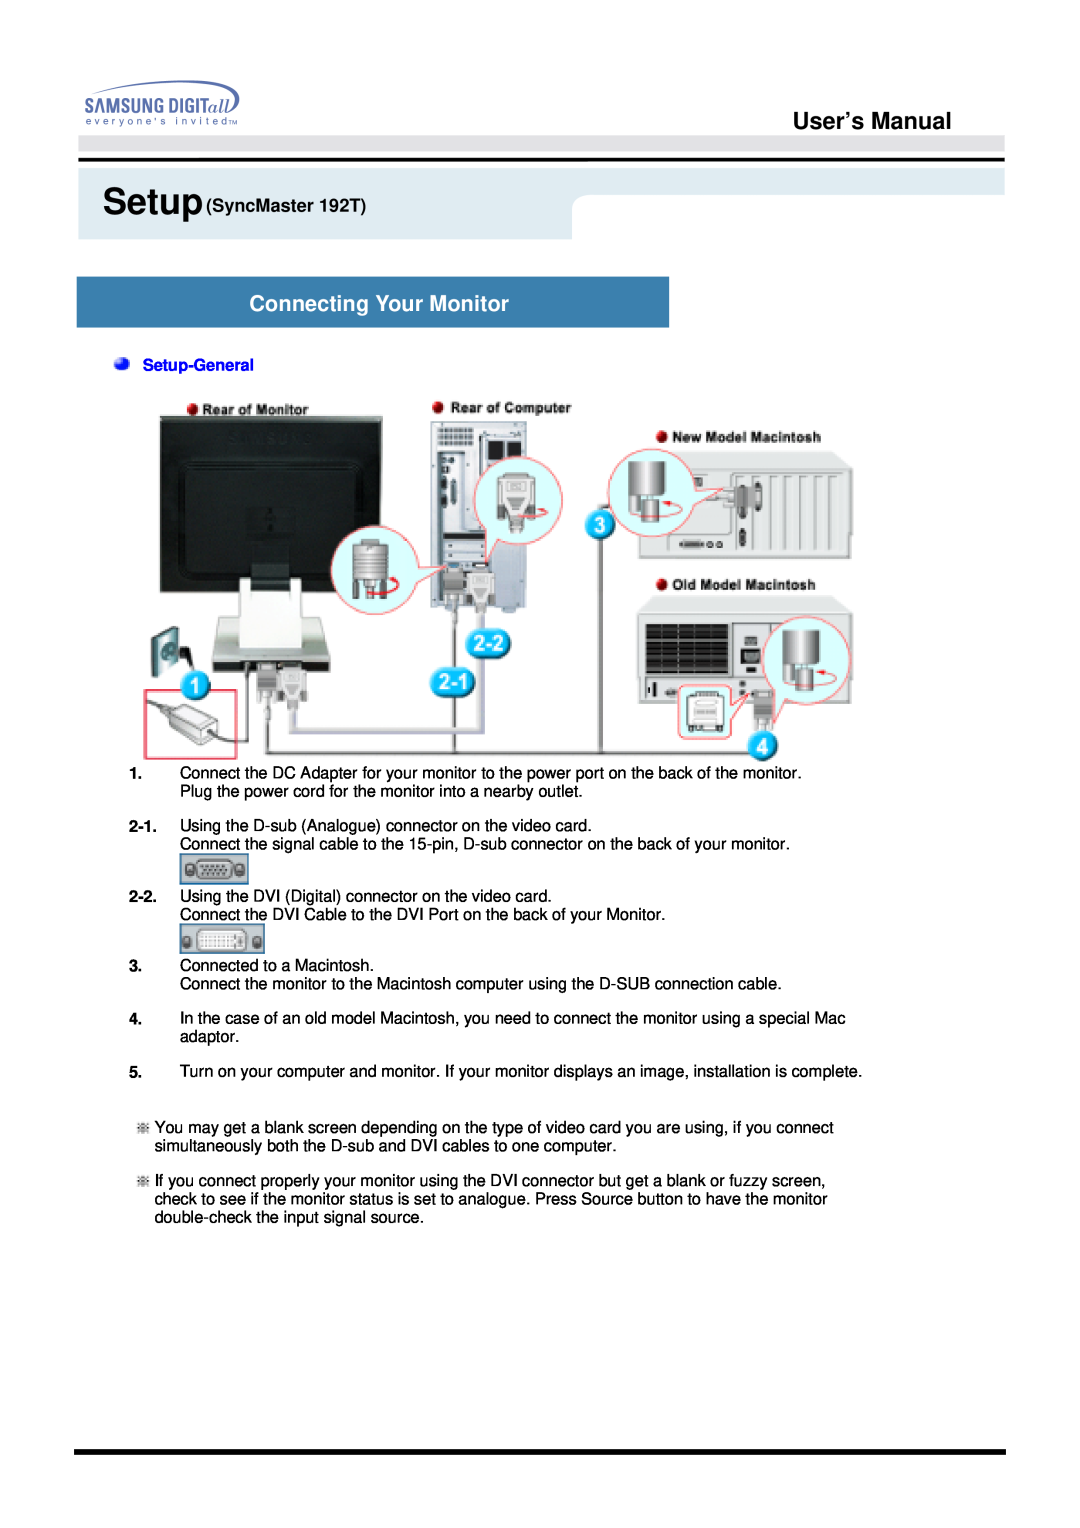 Samsung 192B manual User’s Manual, Connecting Your Monitor, SetupSyncMaster 192T, Setup-General 